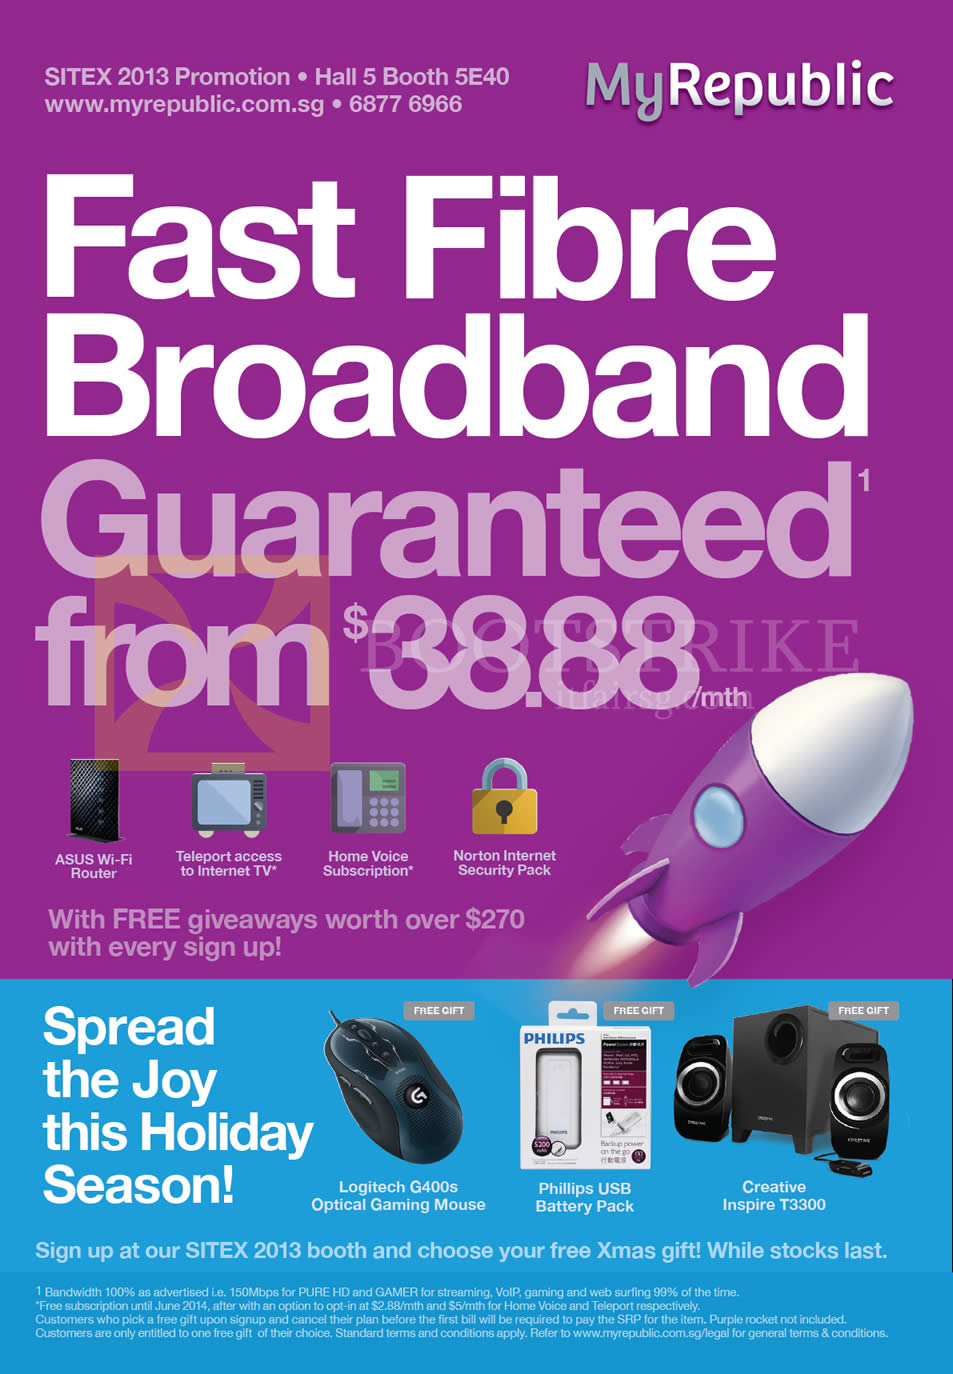 SITEX 2013 price list image brochure of MyRepublic Fibre Broadband 38.88, Free Gifts